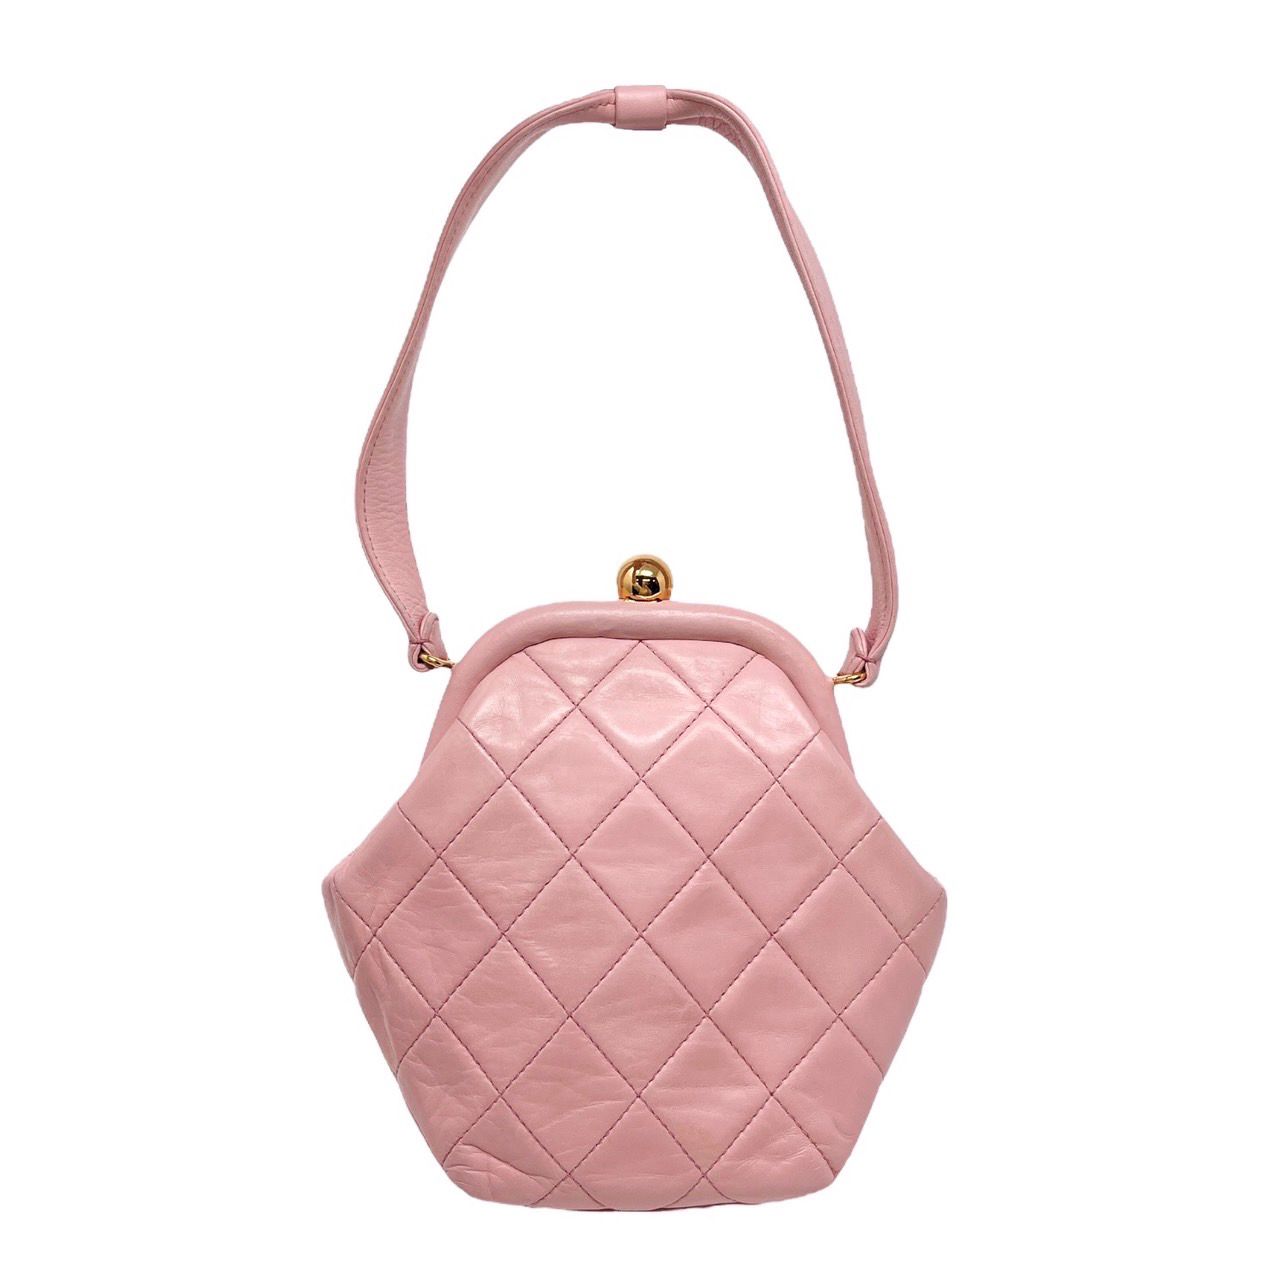 Chanel Baby Pink Mini Top Handle Bag